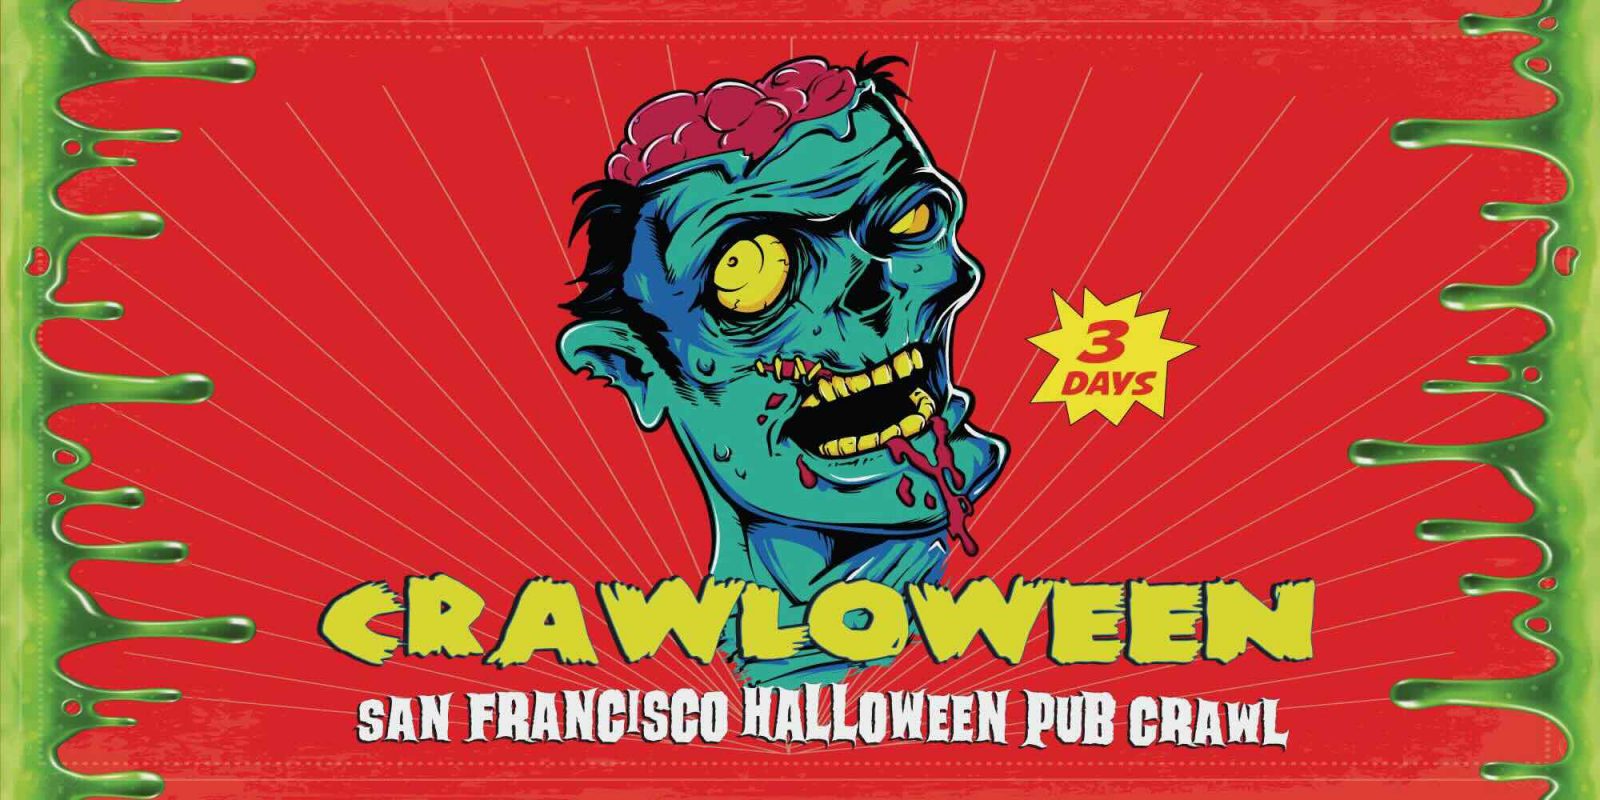 Halloween Pub Crawl in San Francisco - Crawloween